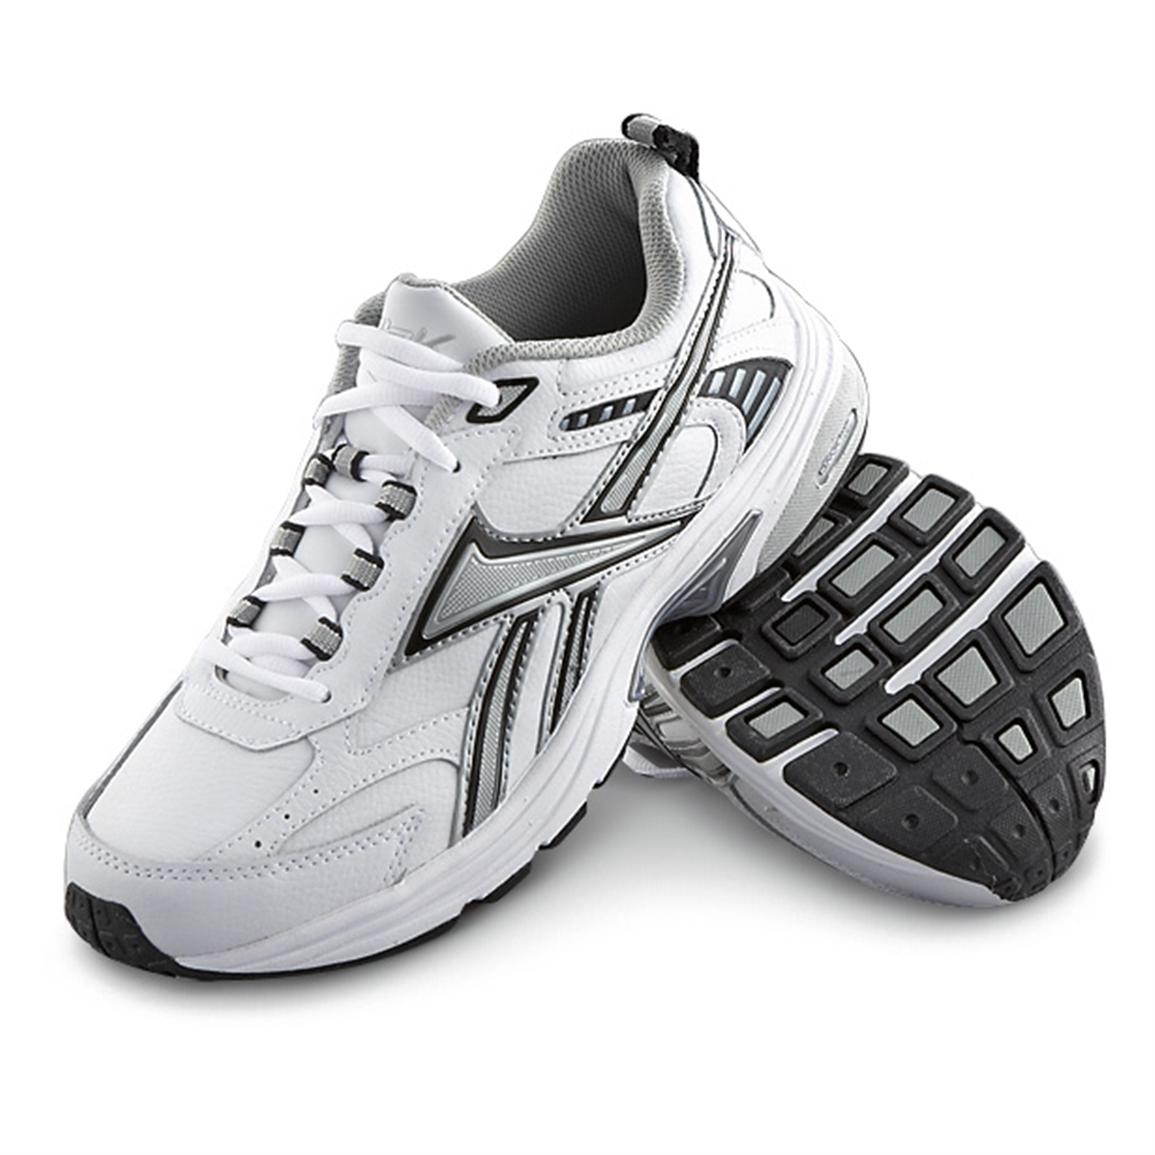 Men's Reebok® Running Shoes, White / Black - 139413, Running Shoes ...